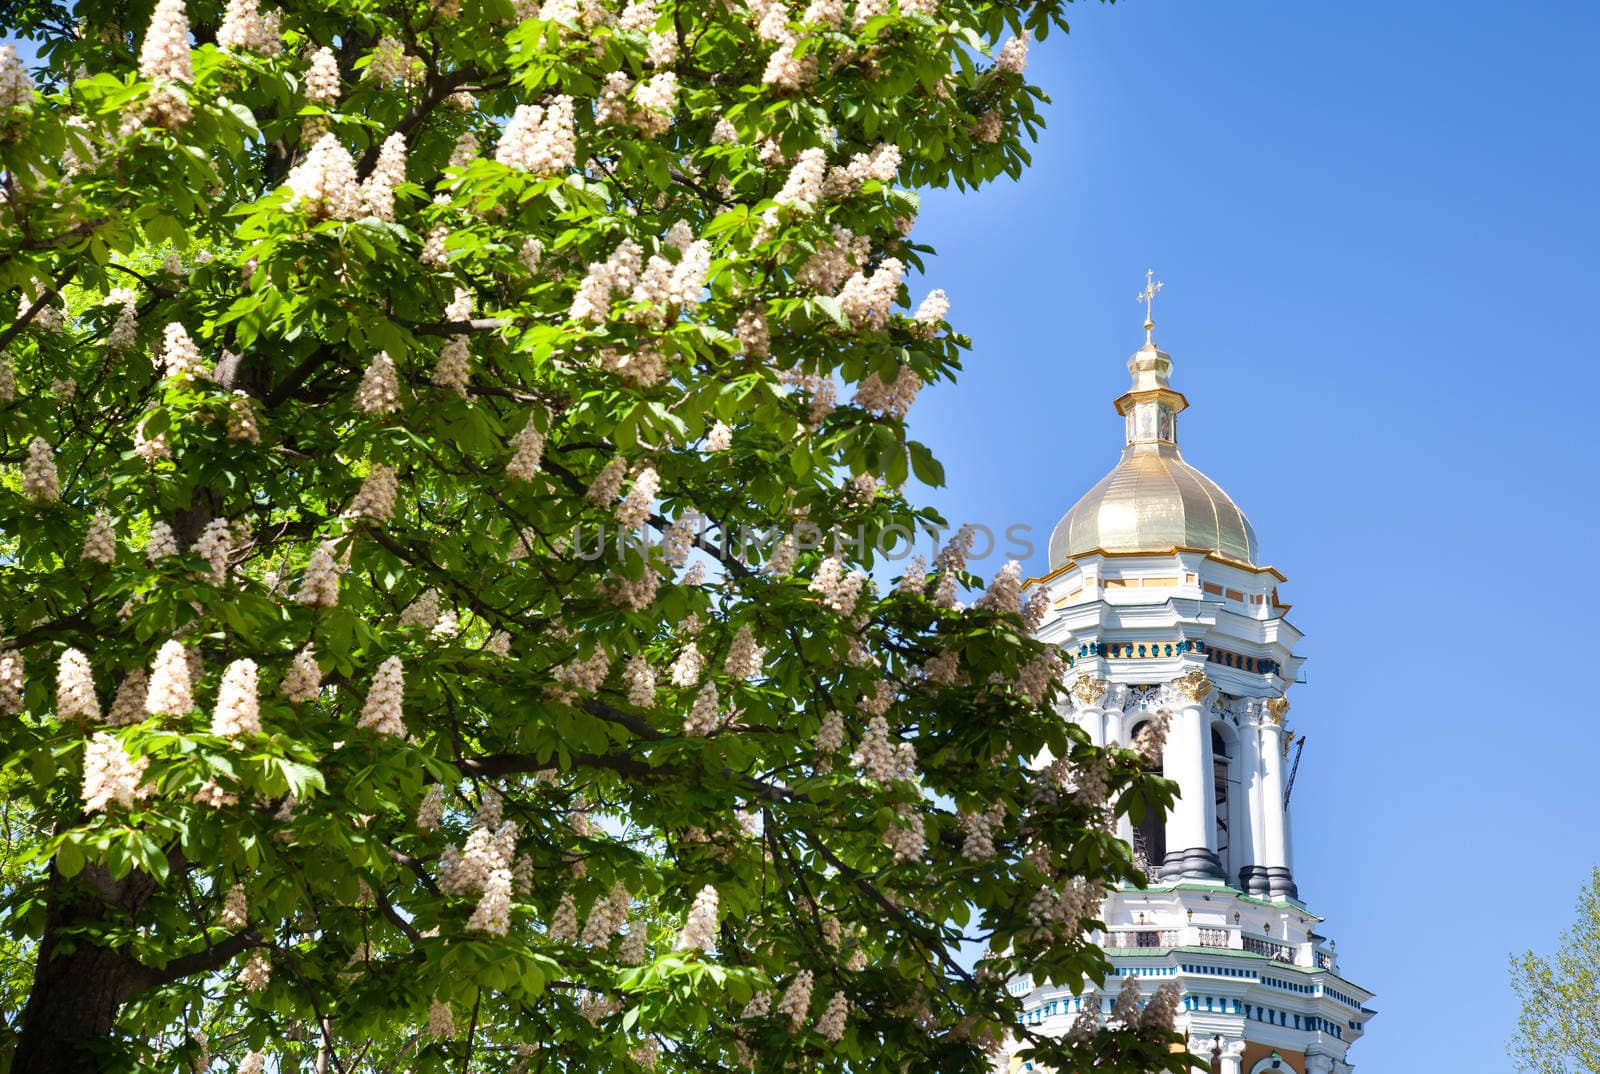 Kiev Pechersk Lavra monastery and chesnut tree in blossom by RawGroup